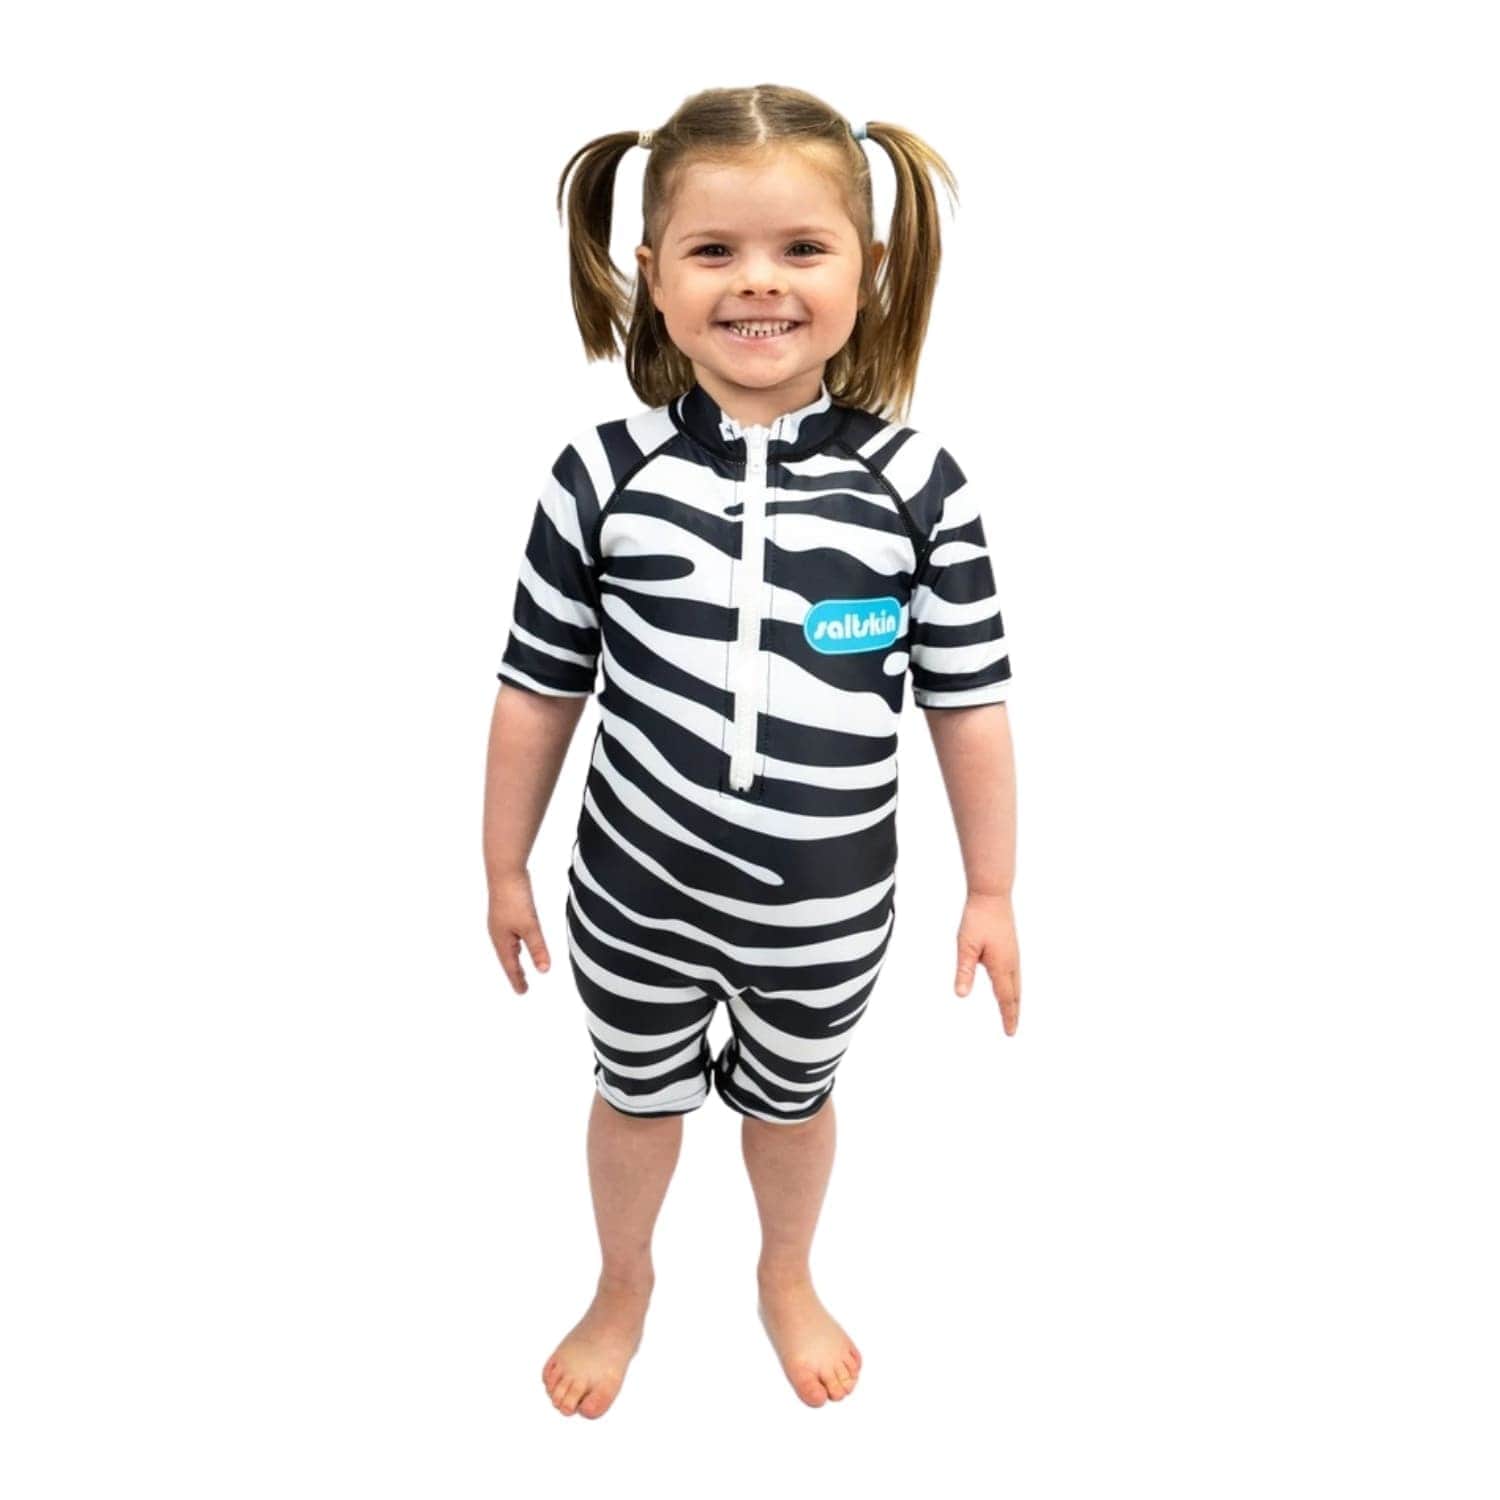 Saltskin Kids UV Shorty Sun Suit - Zebra - Kids UV Rash Vest by Saltskin